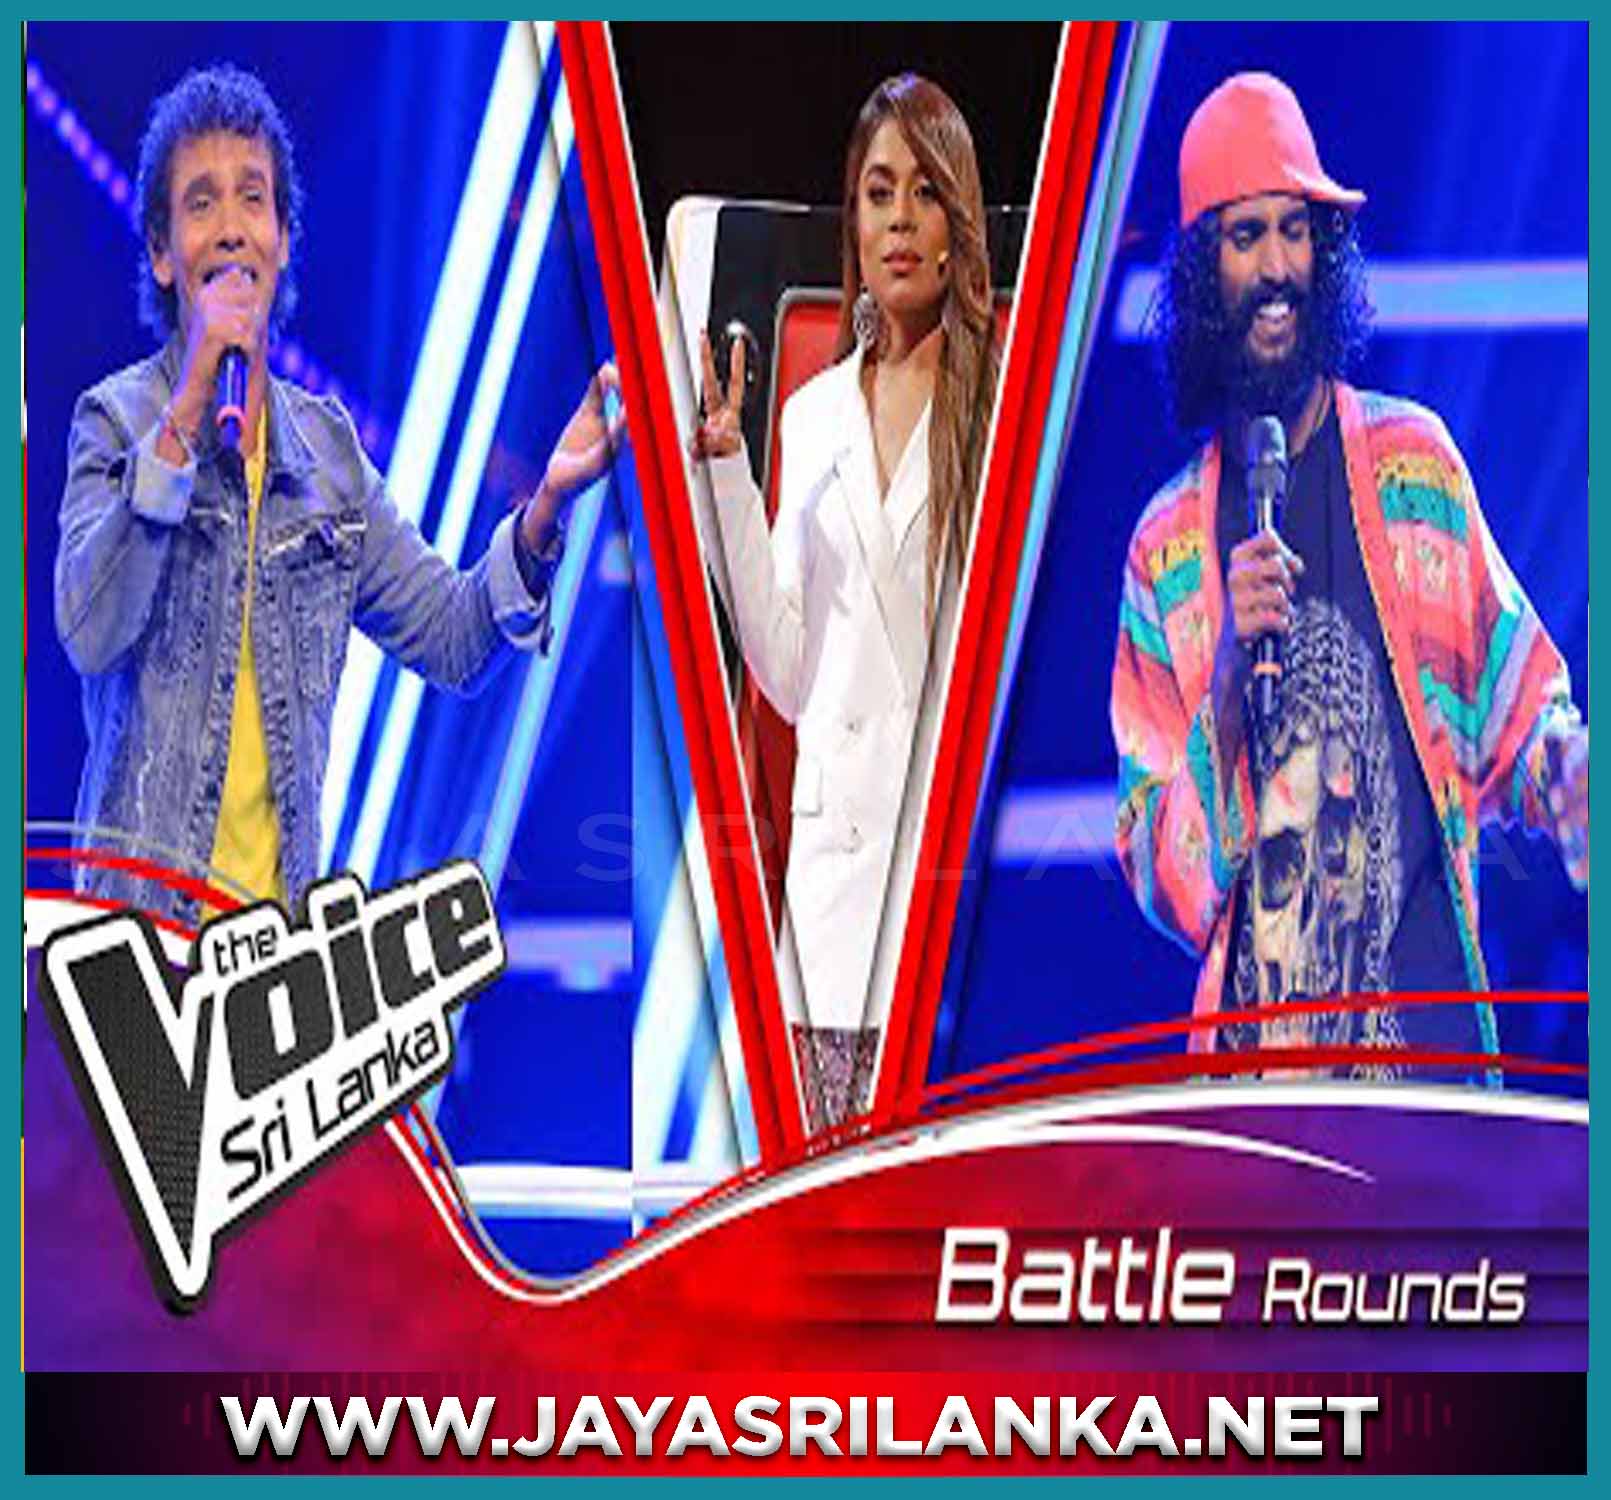 Seetha Mosam (Battle Rounds The Voice Sri Lanka)